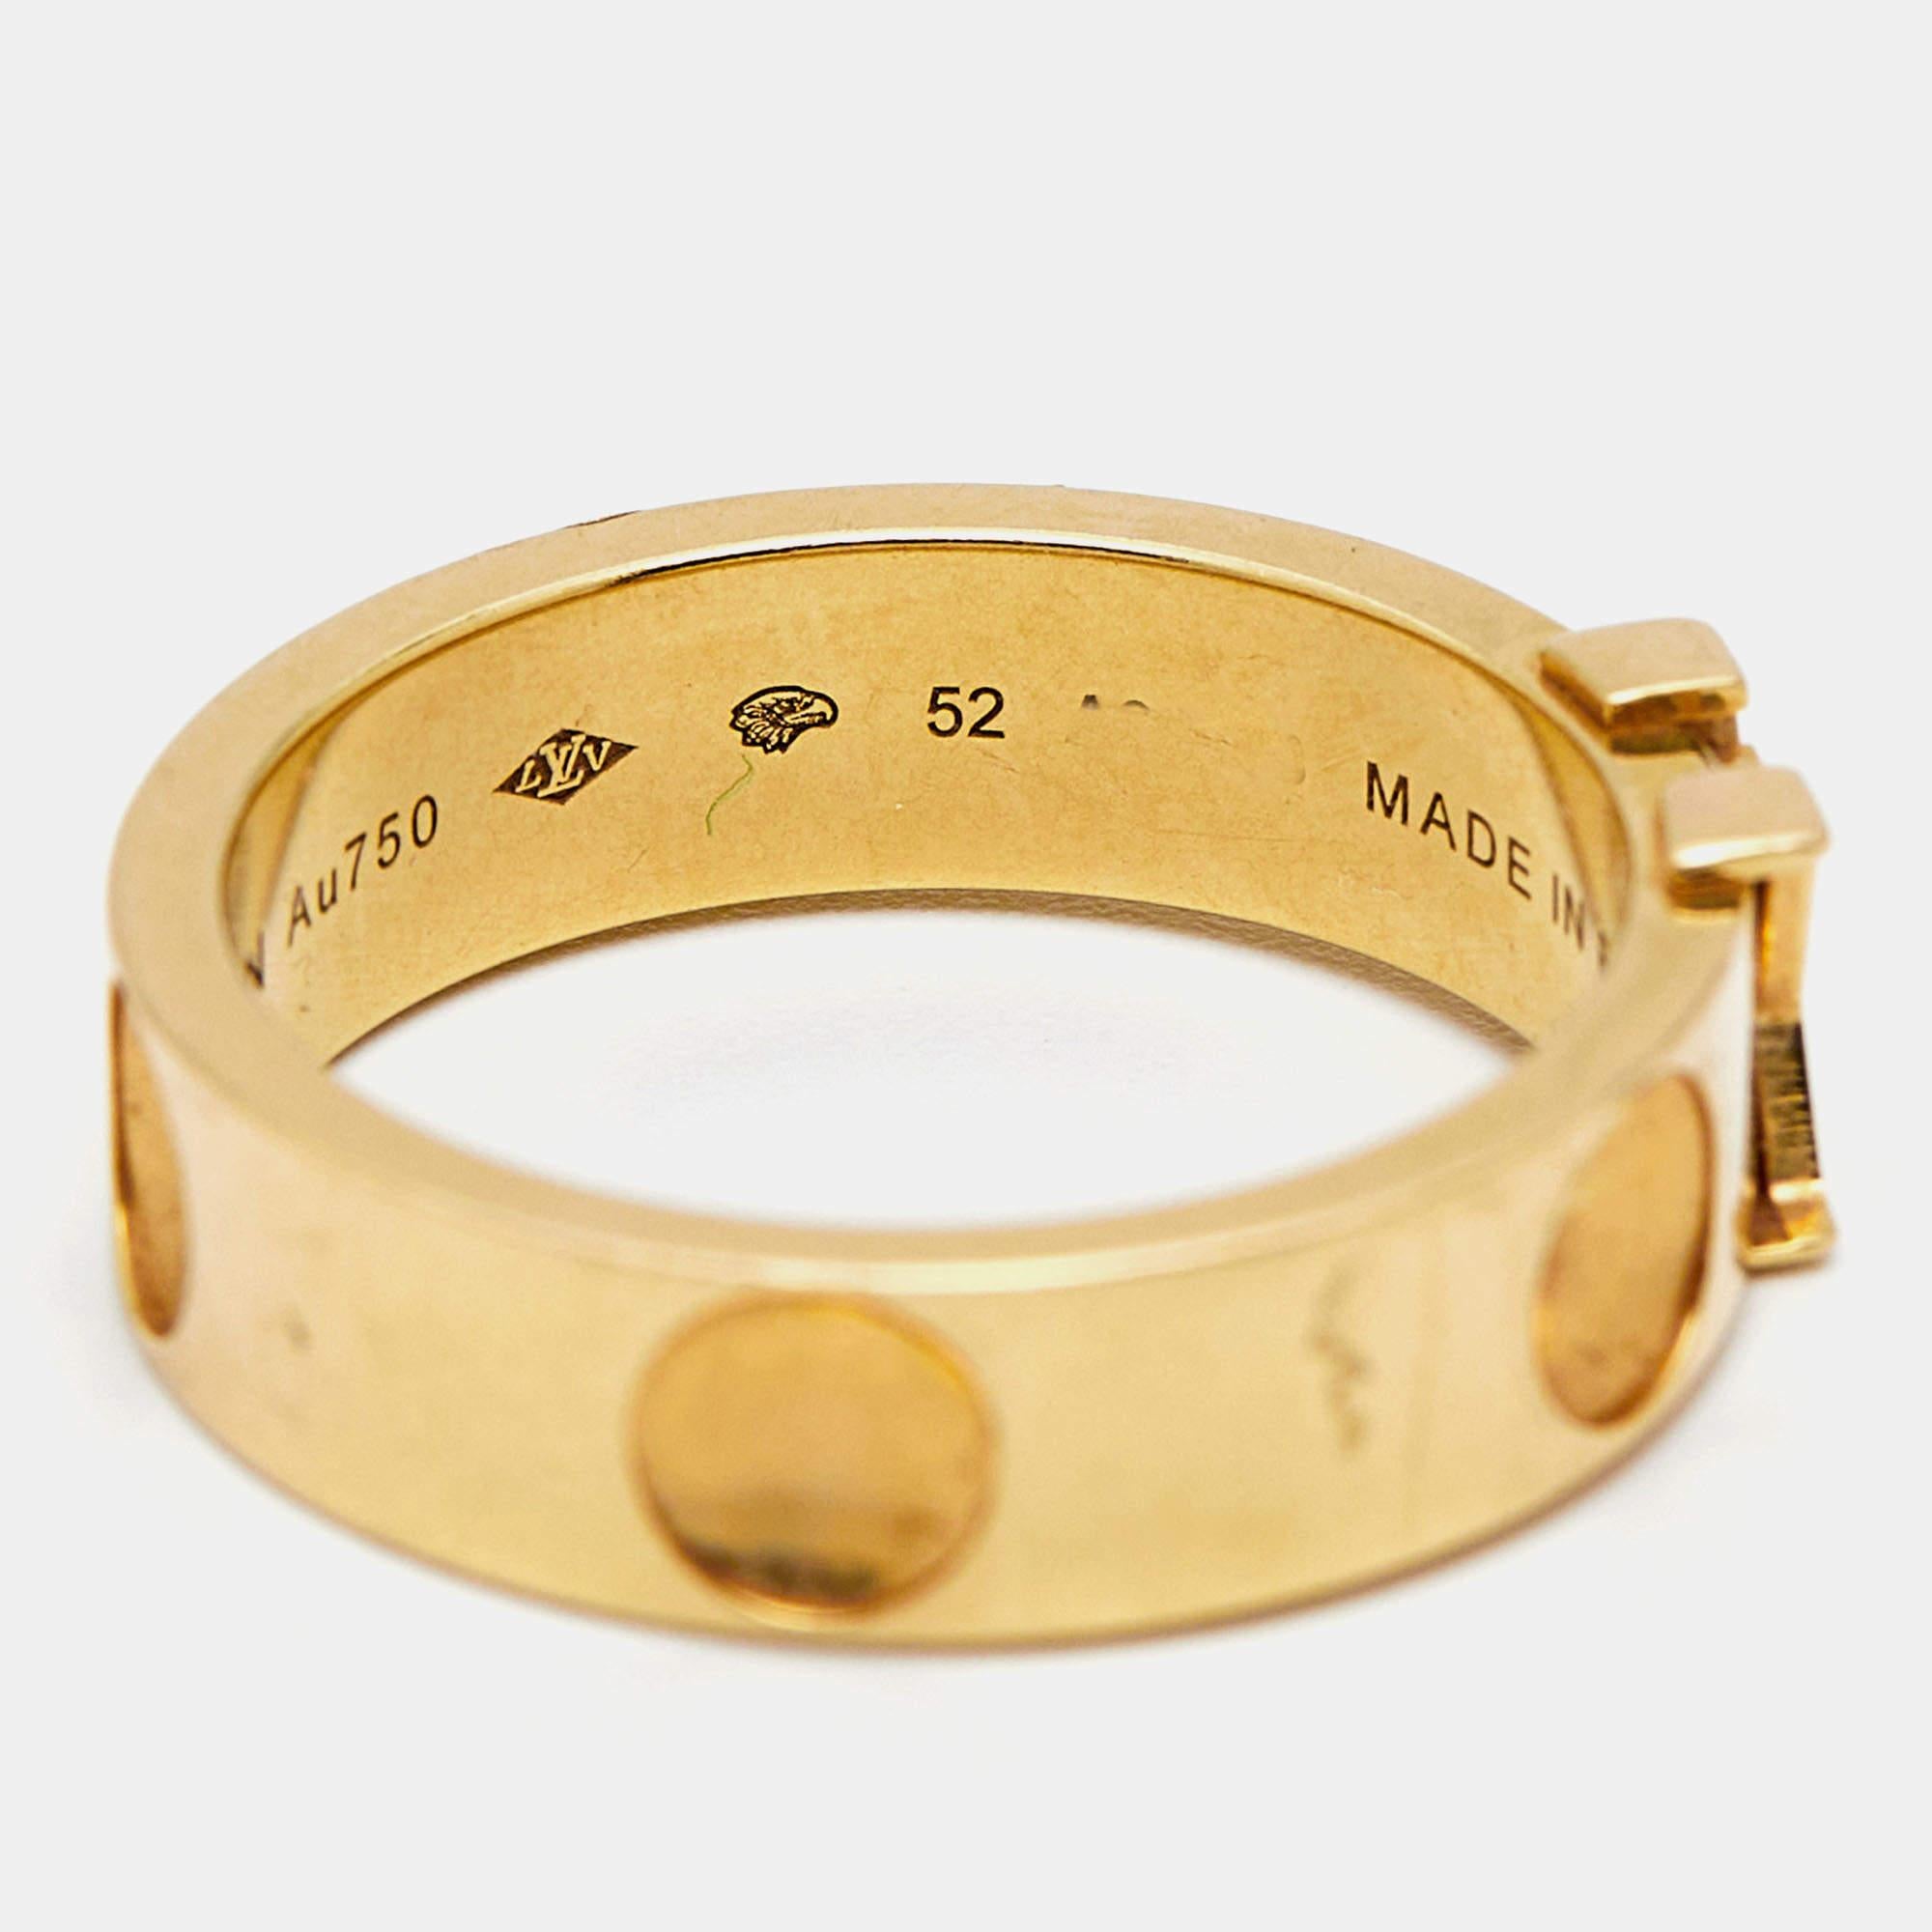 Louis Vuitton Empreinte 18k Yellow Gold Ring Size 52 For Sale 2